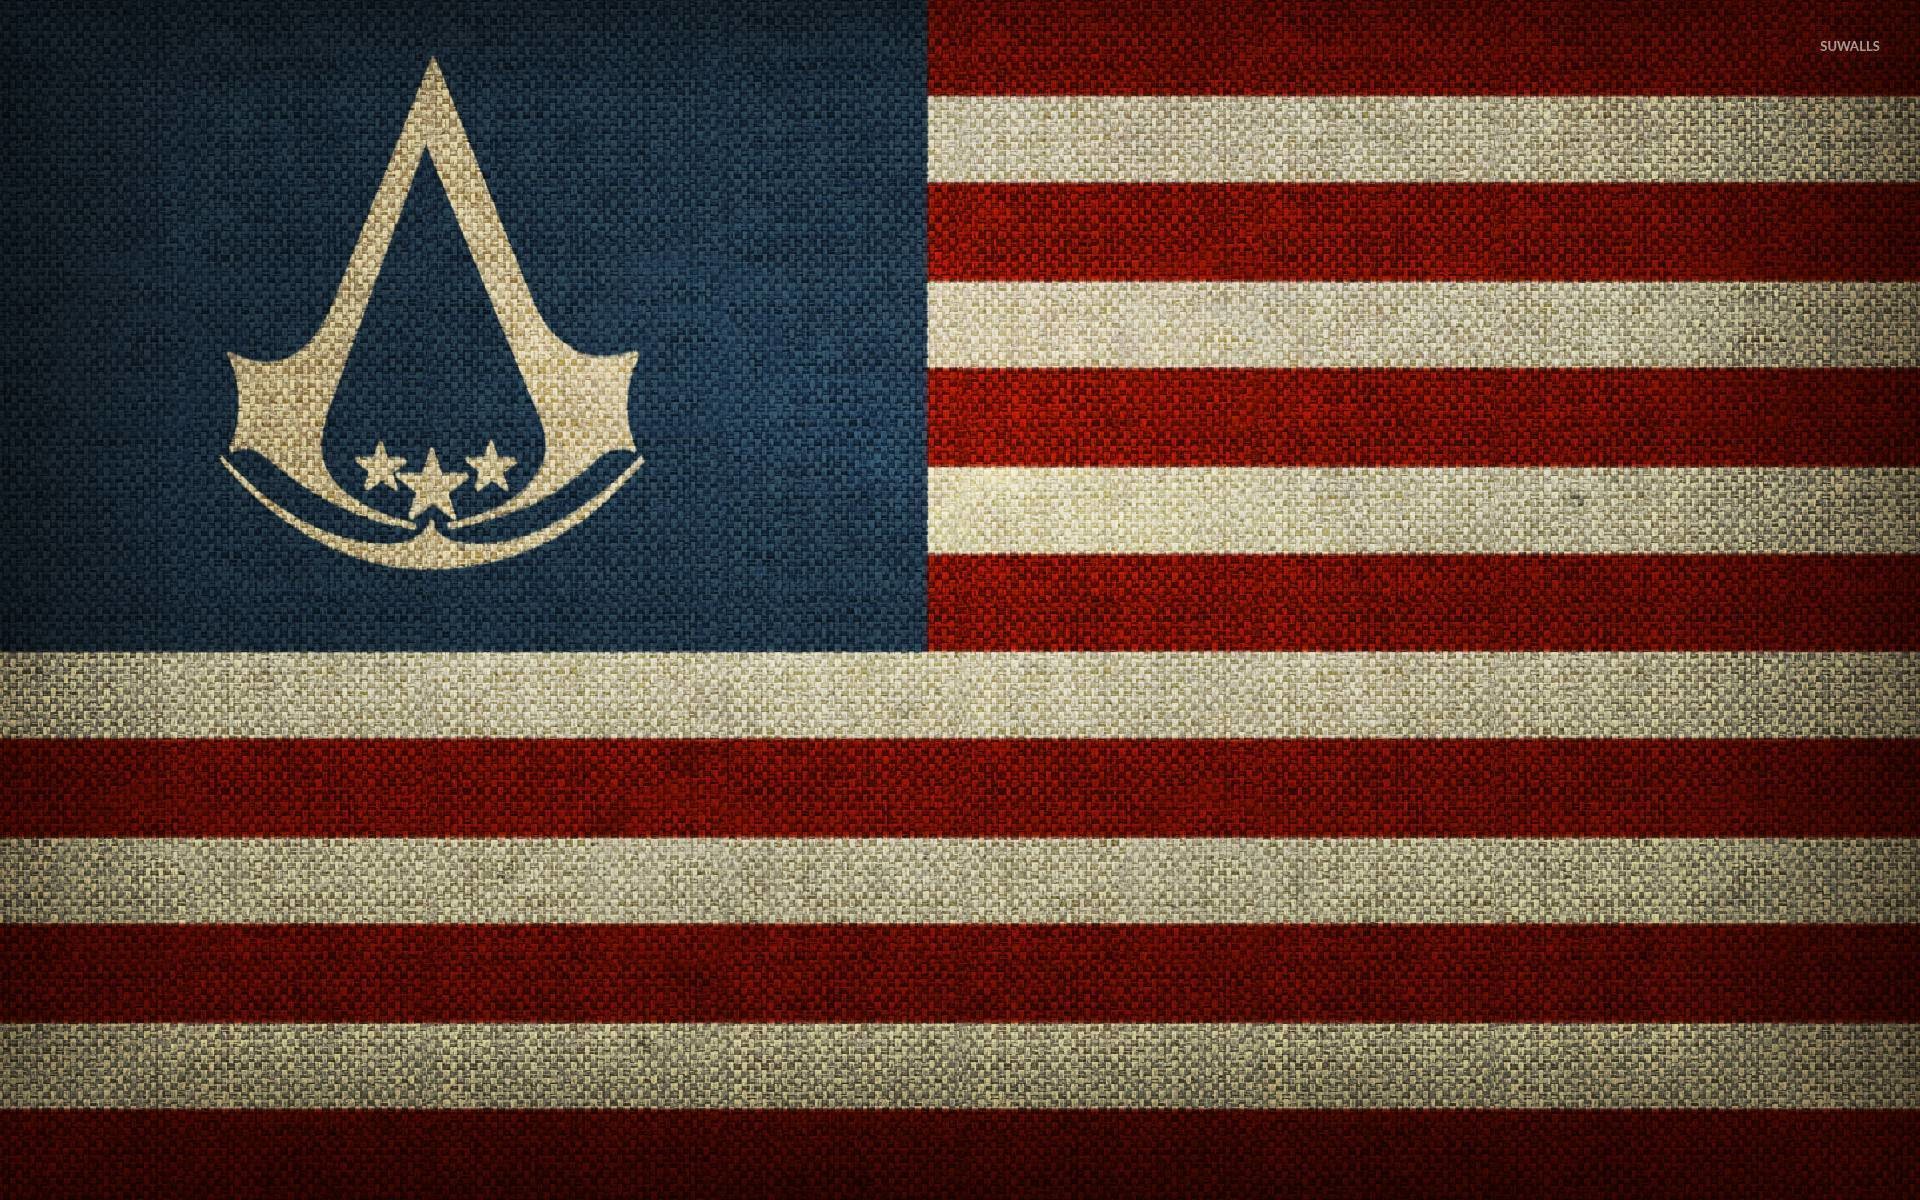 Assassins Creed flag wallpaper jpg